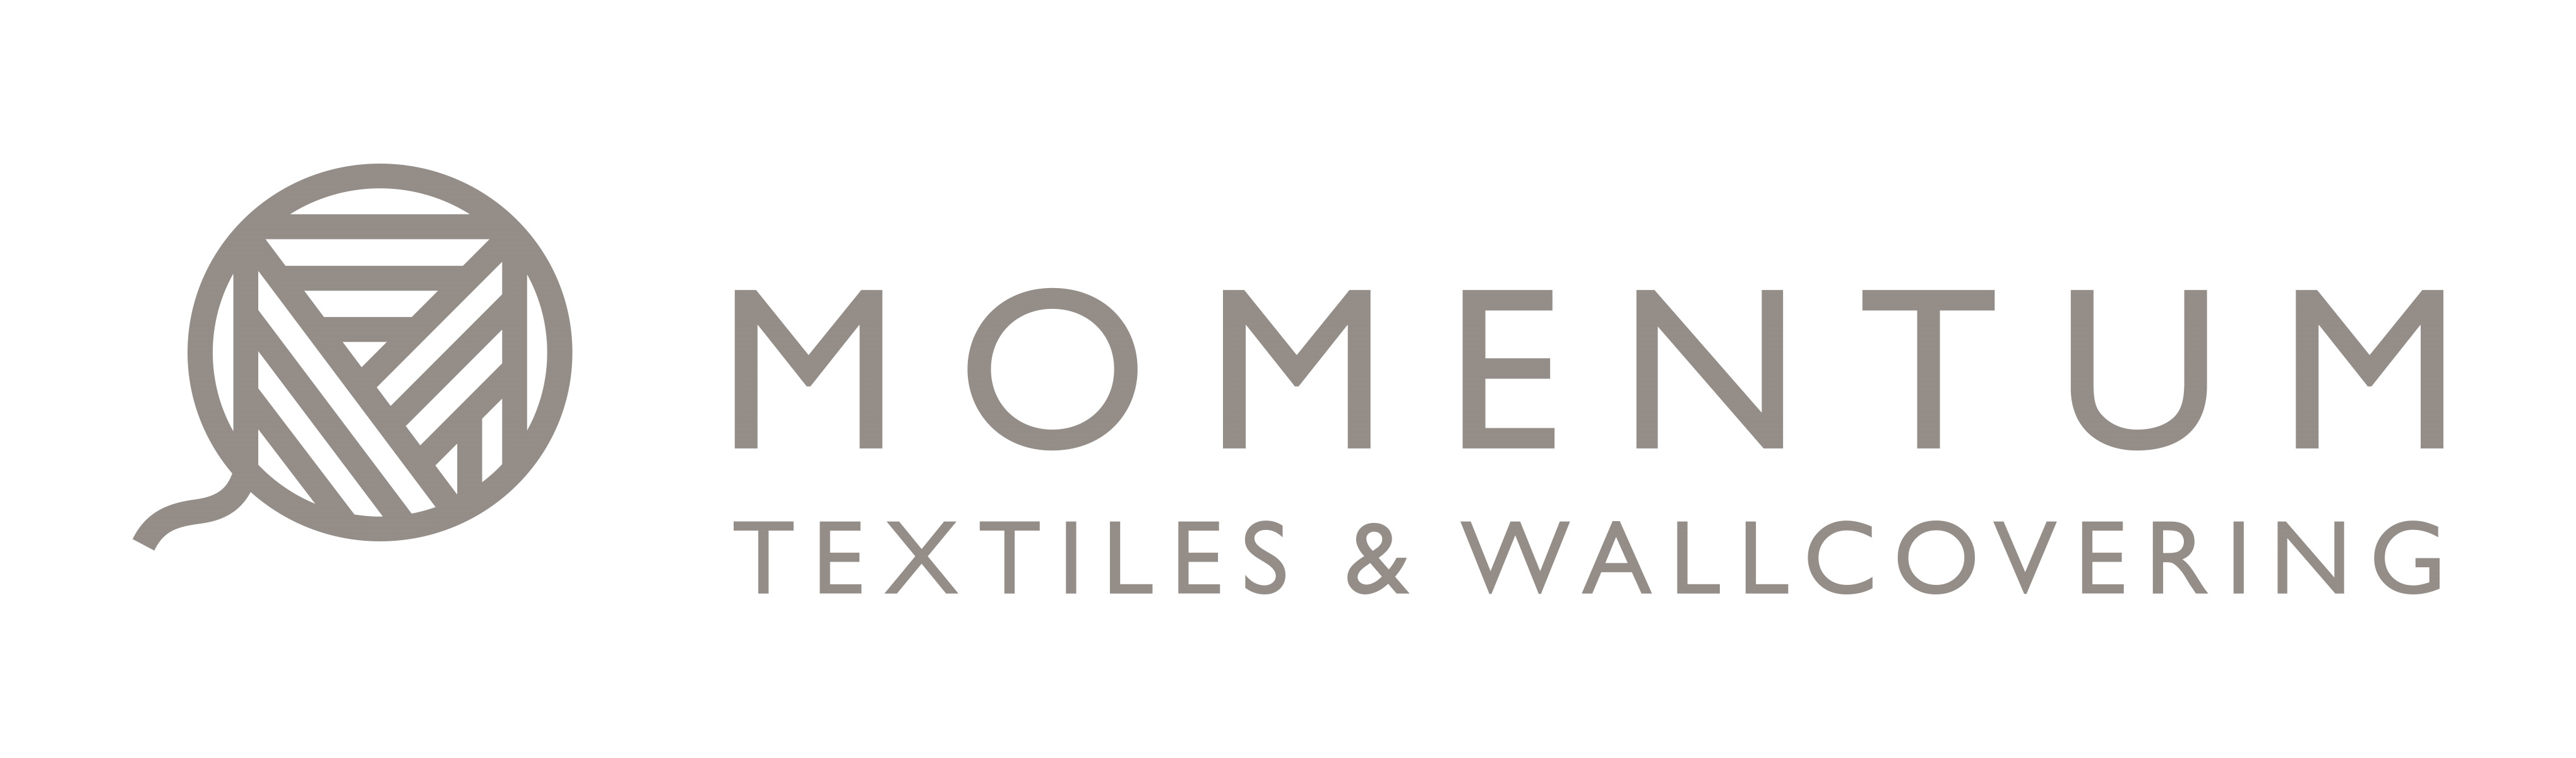 Momentum Textiles & Wallcovering Company Logo